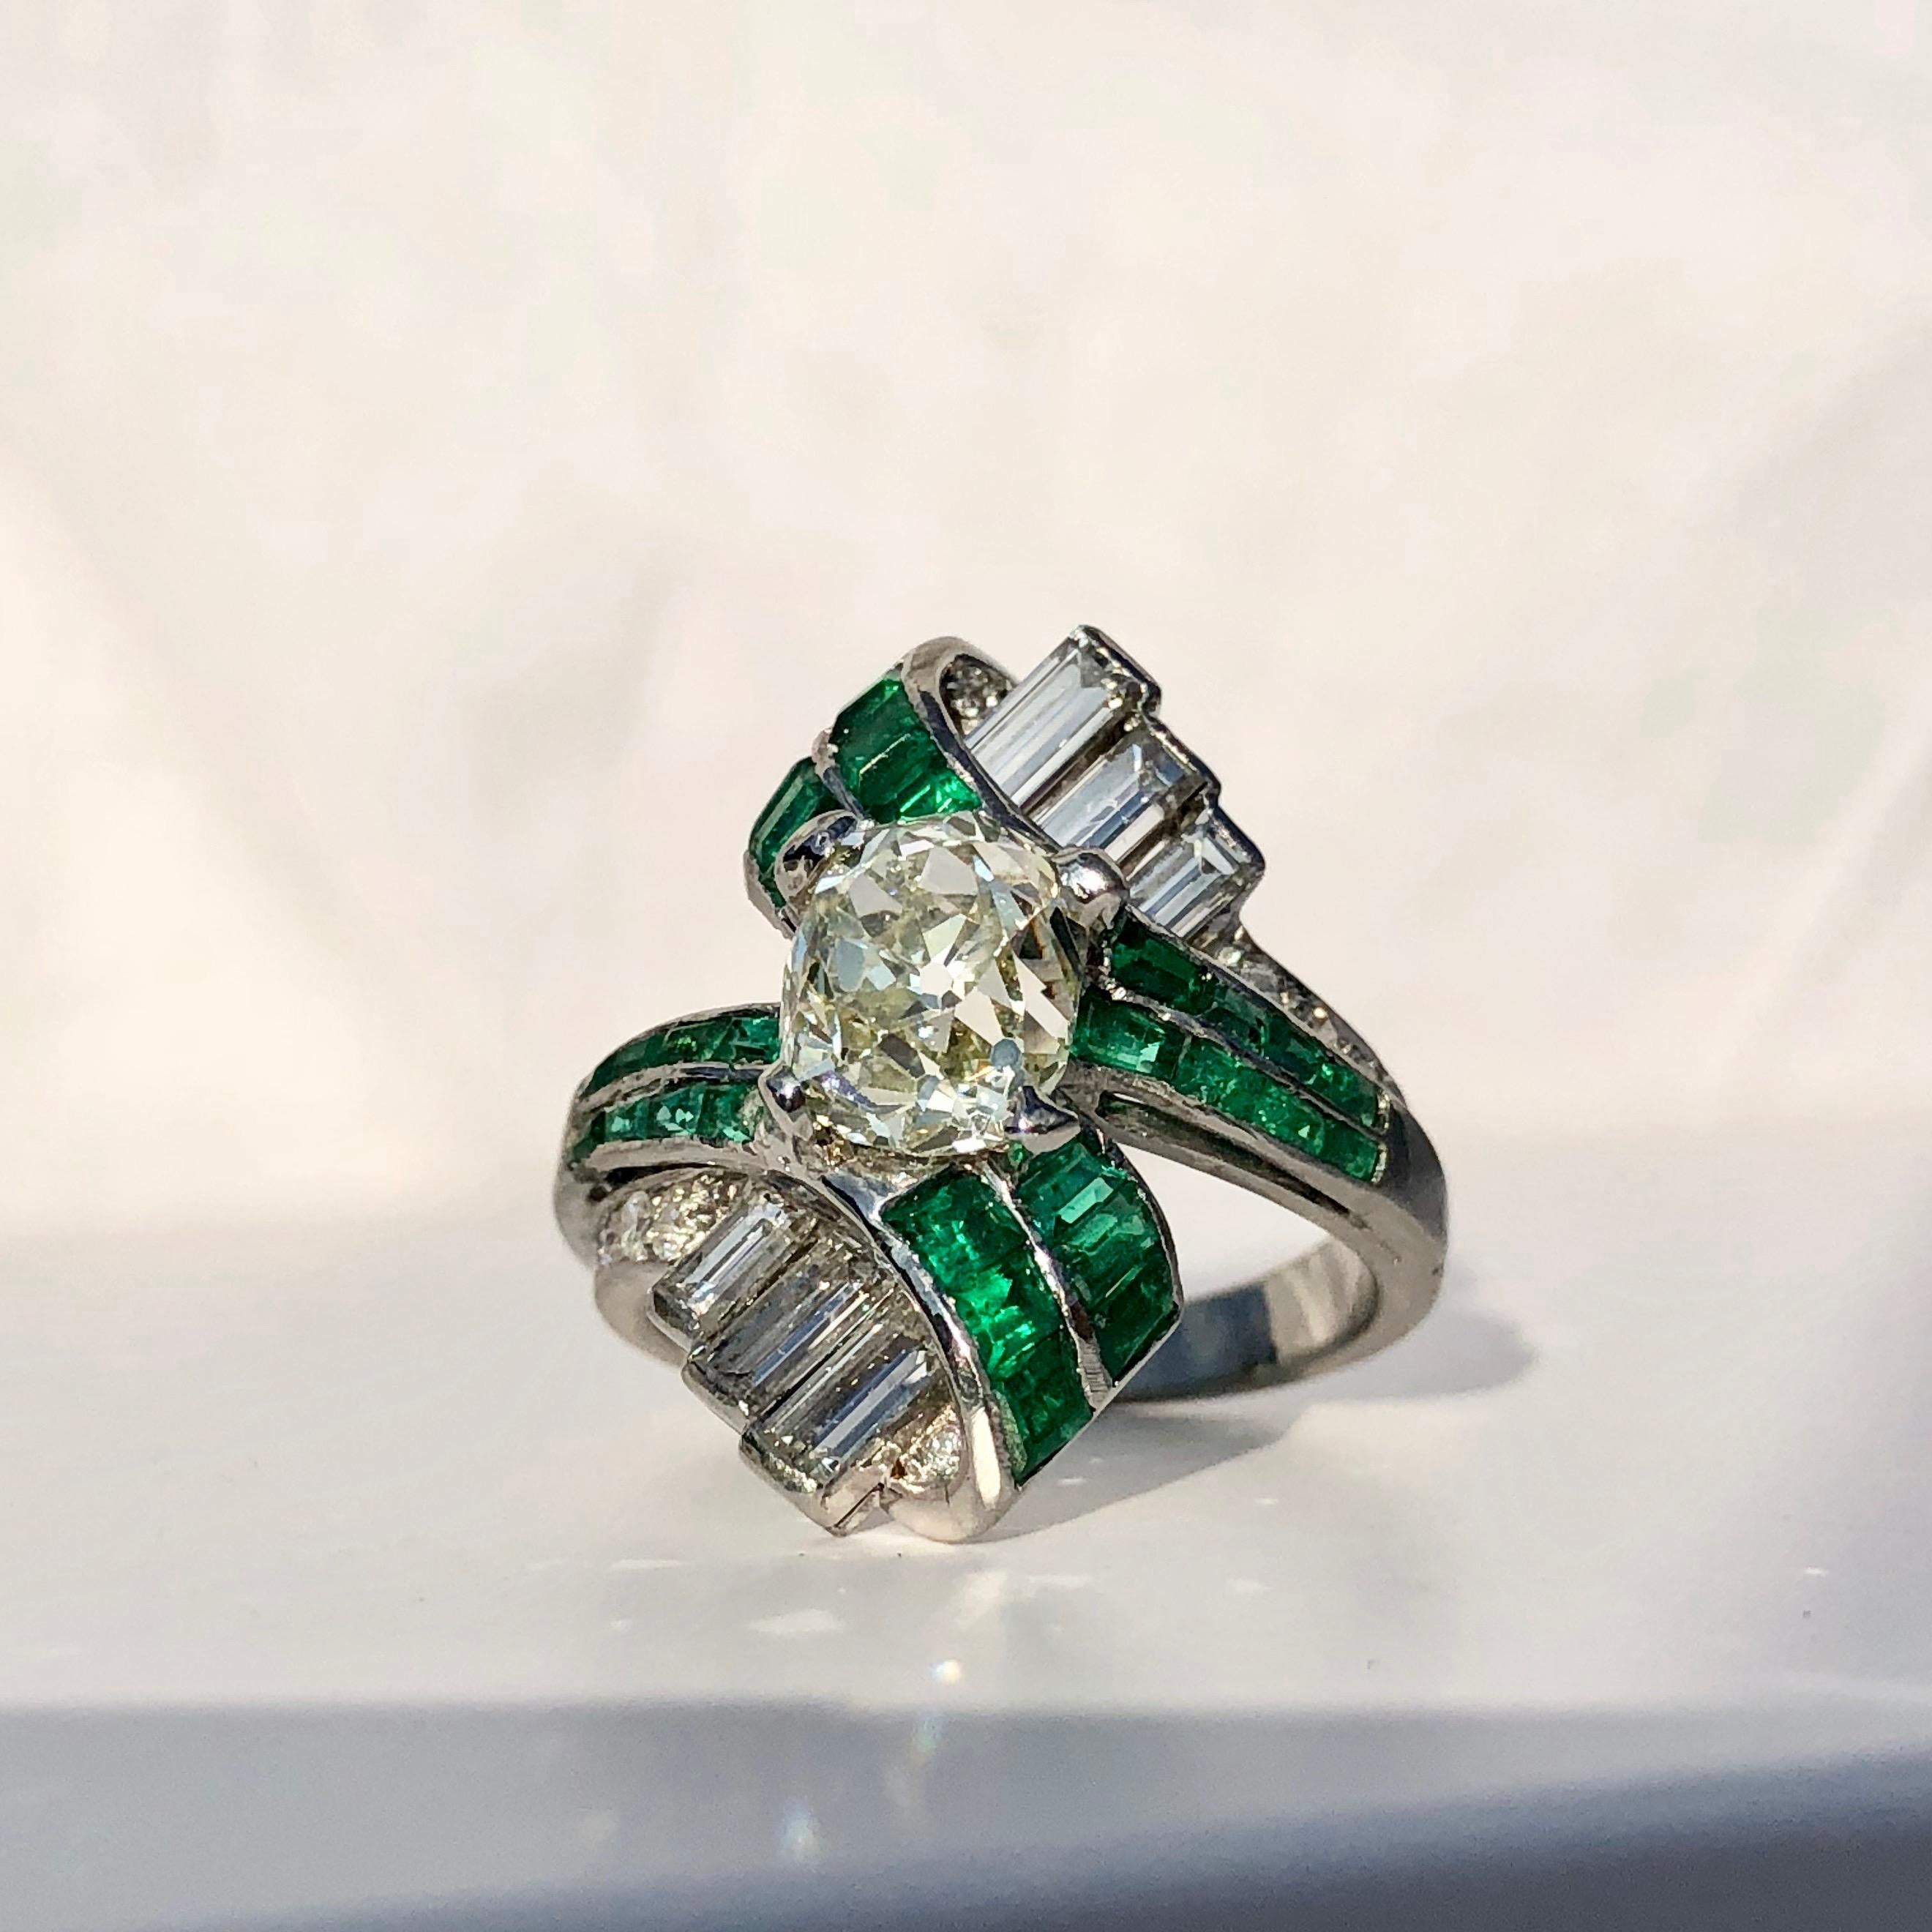 Antique Baguette Emerald And Old Cut Diamond Art Deco Cocktail Engagement Ring  For Sale 2